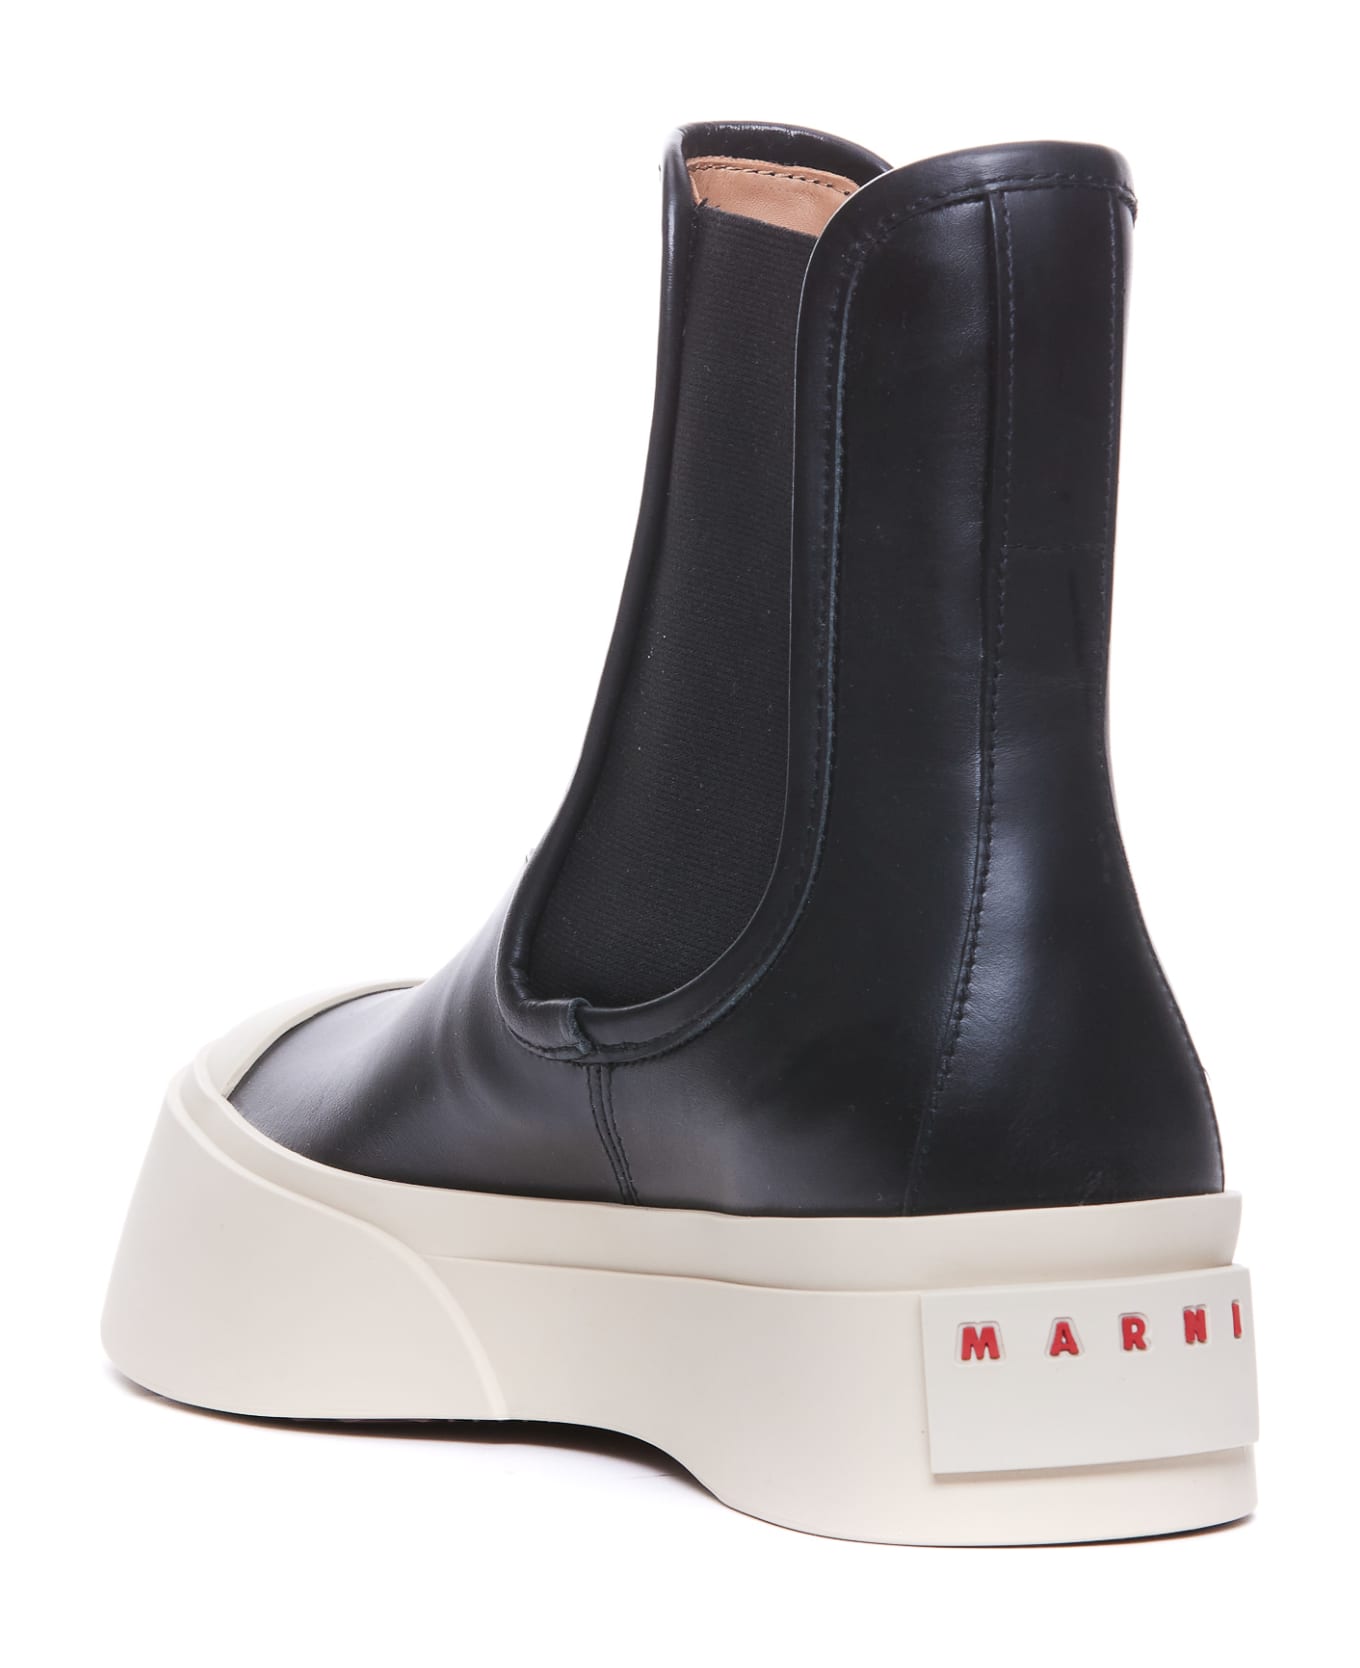 Marni Pablo Chelsea Boots - Black スニーカー